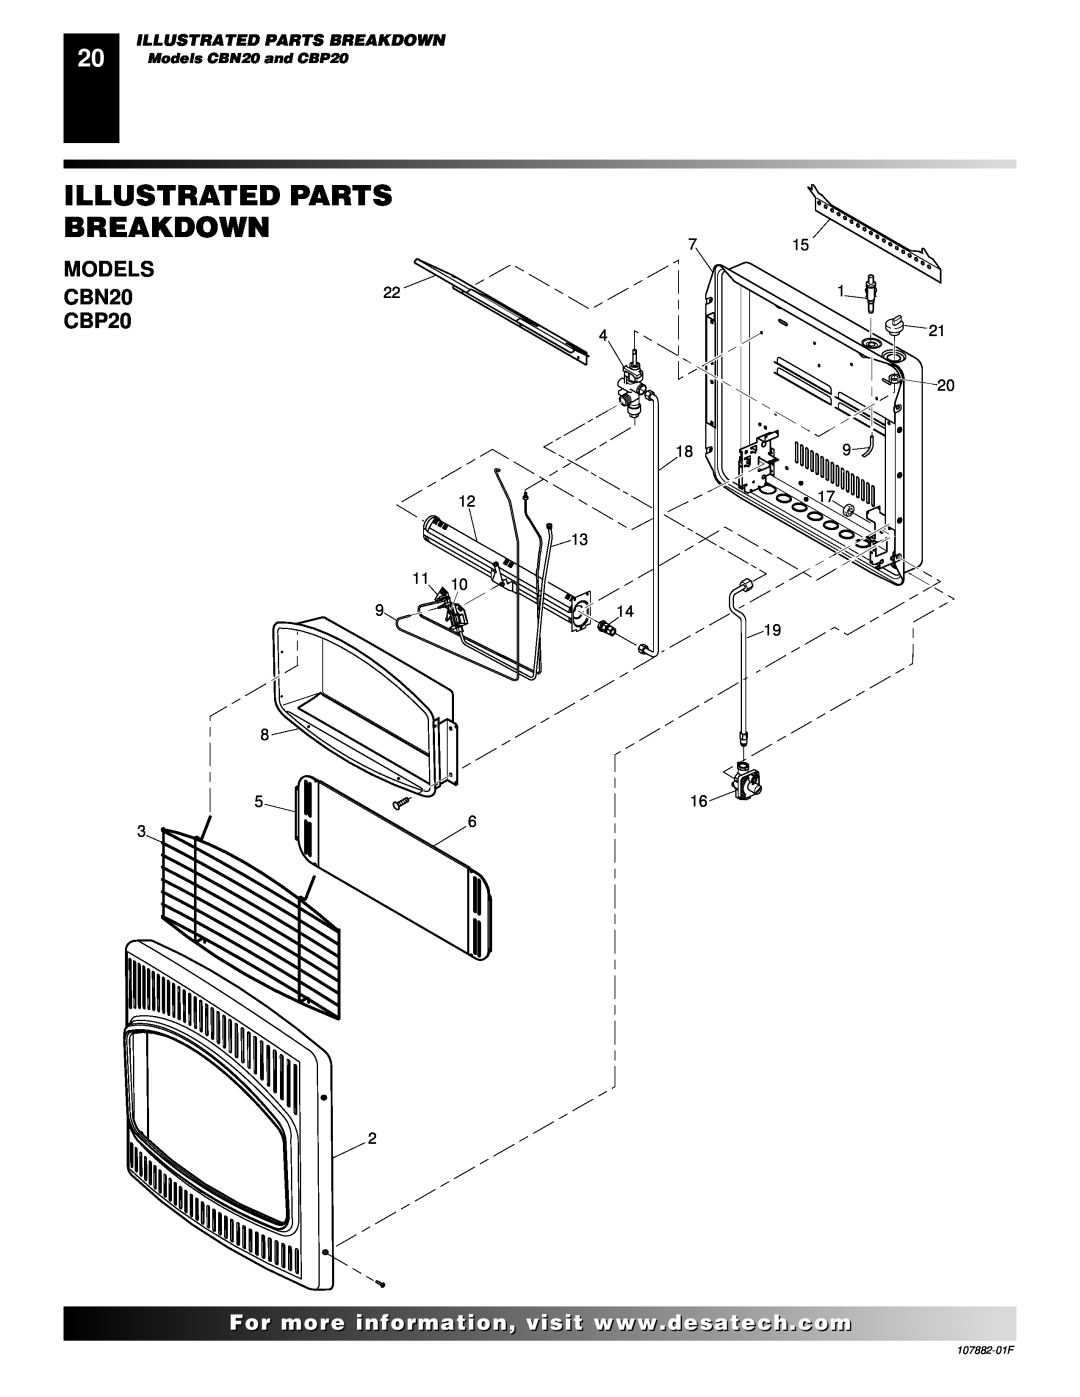 Desa CBN20 installation manual Illustrated Parts Breakdown, Models, CBP20 